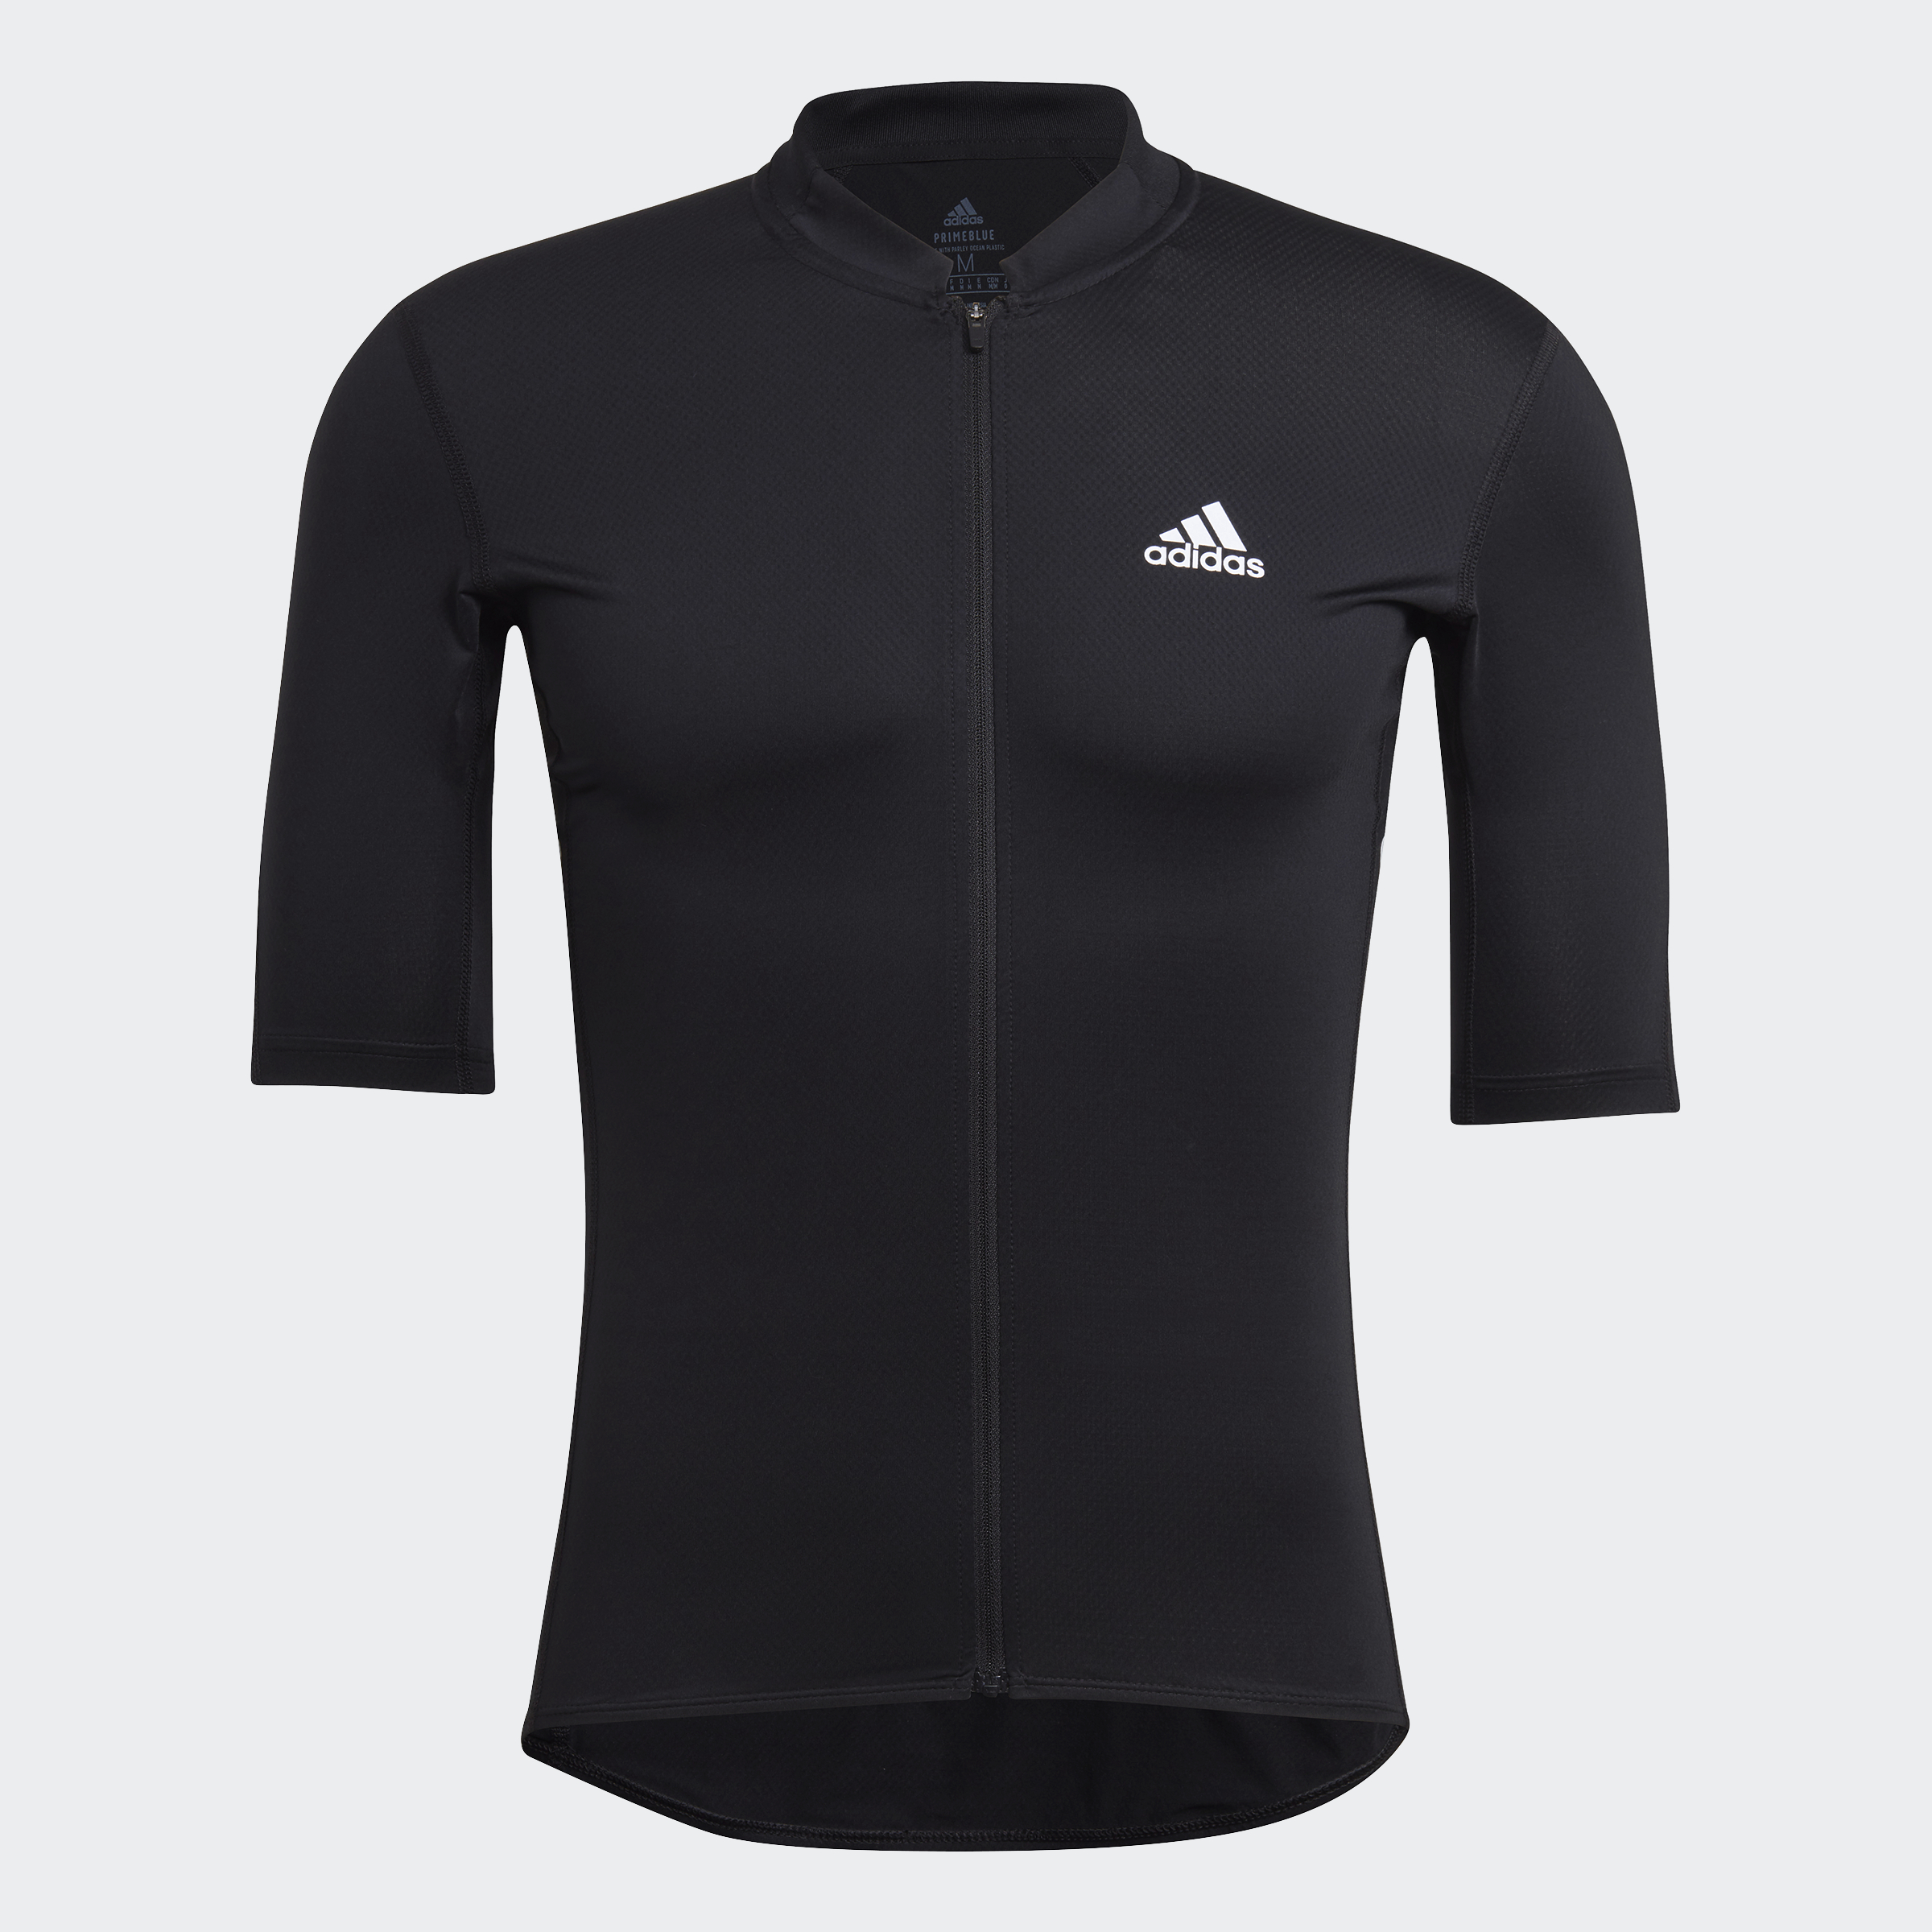 Adidas Mens Short Sleeve Cycling Jersey Black Medium for sale online eBay